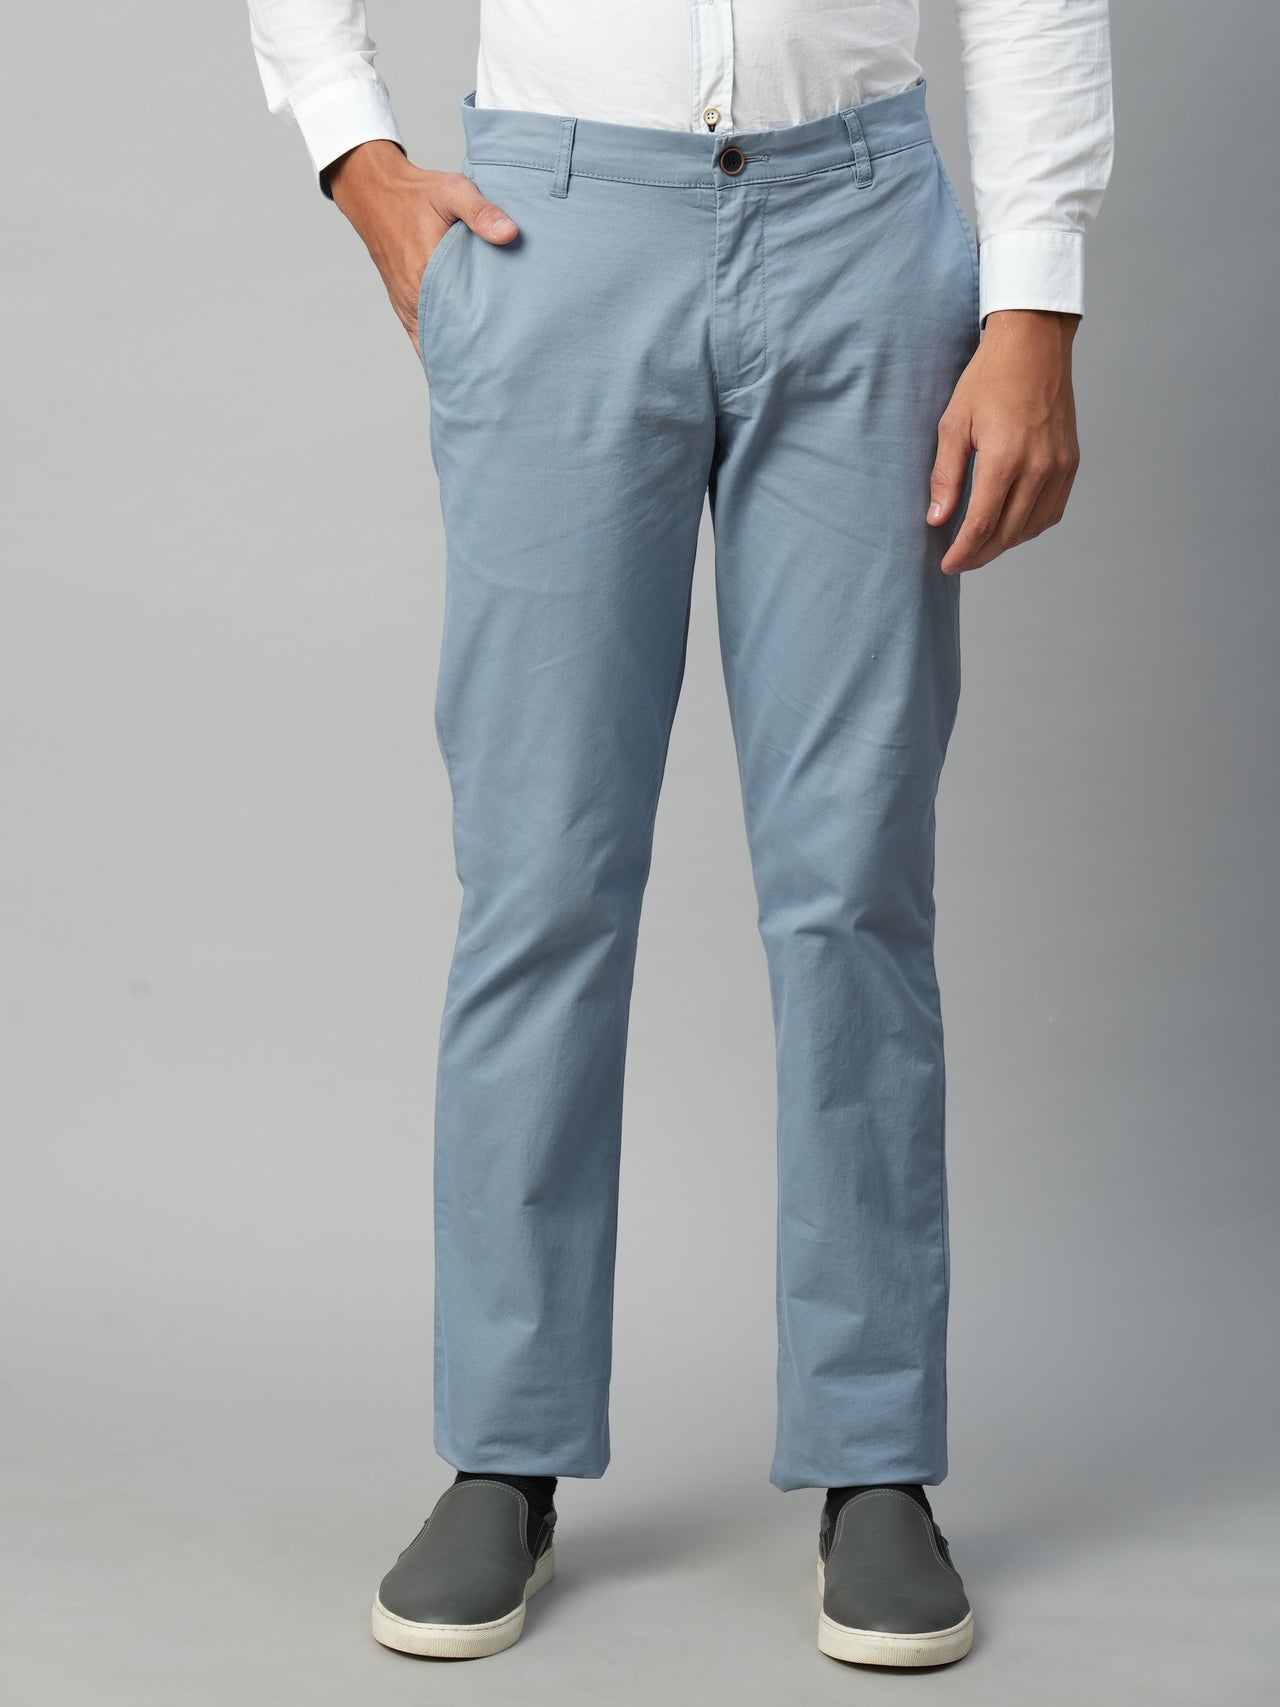 Men's Greyish Blue Cotton Lycra  Regular Fit Pant